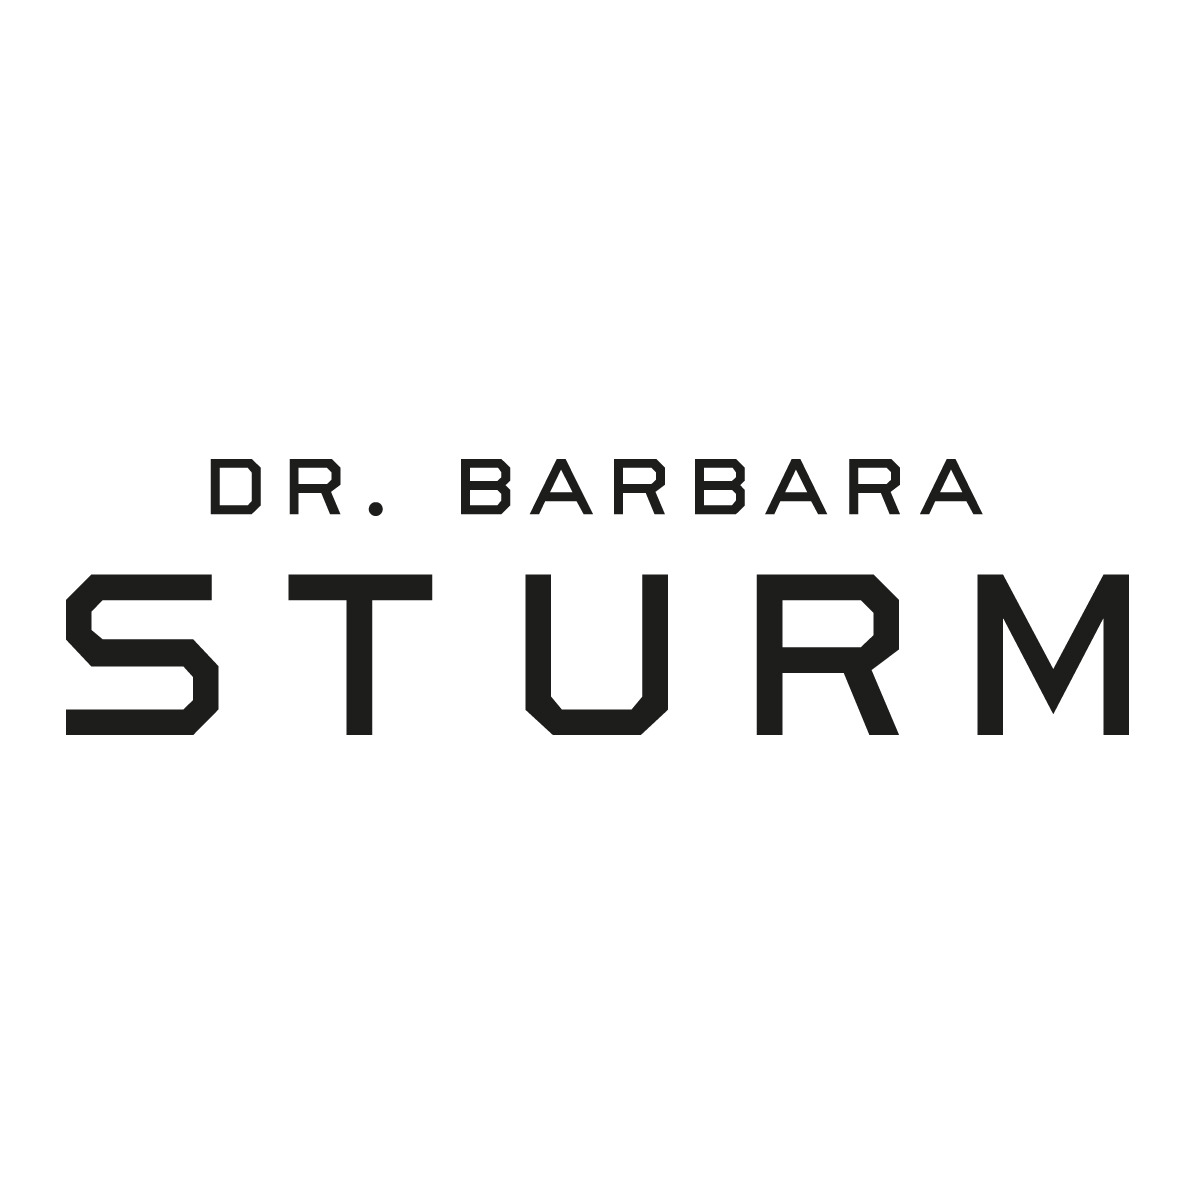 Barbara Sturm Molecular Cosmetics GmbH